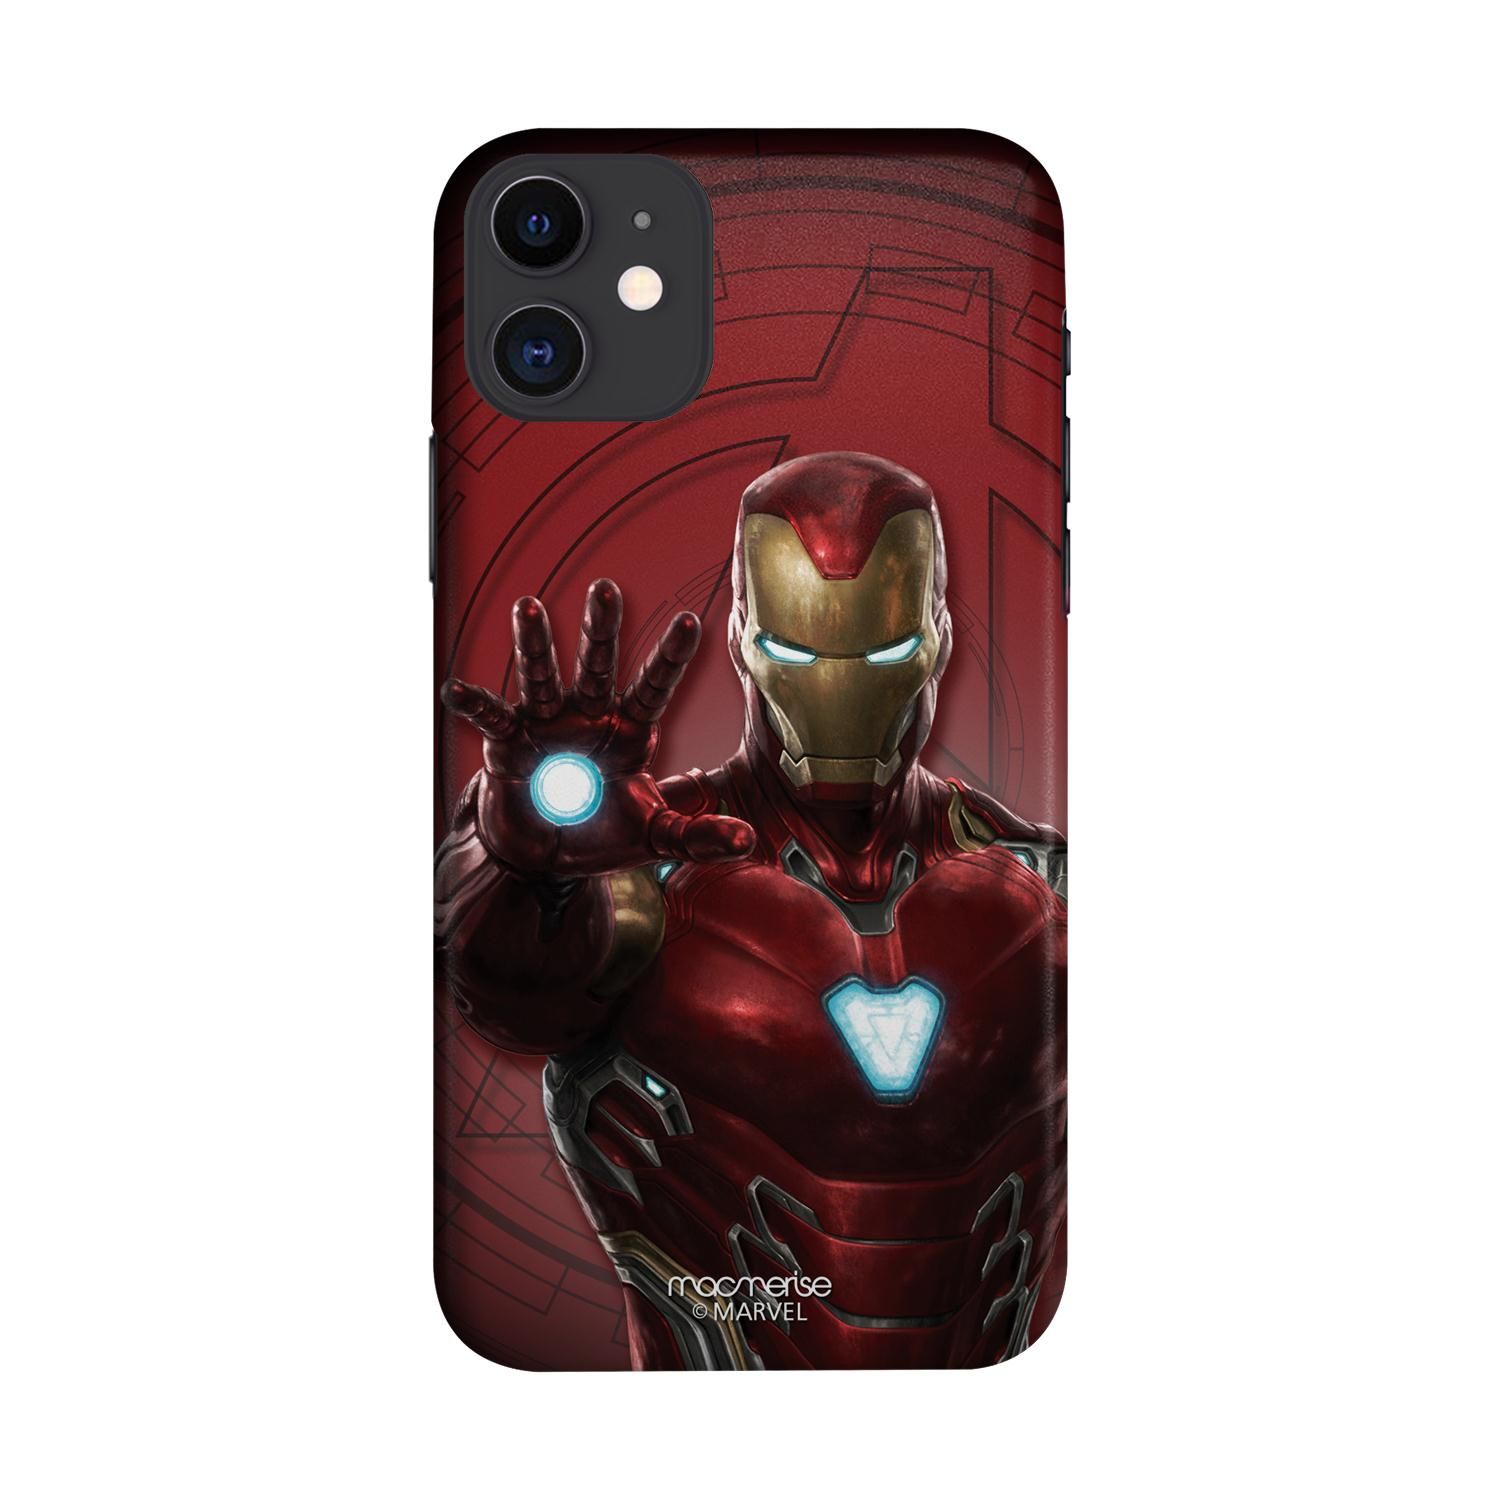 Buy Iron man Mark L Armor - Sleek Phone Case for iPhone 11 Online